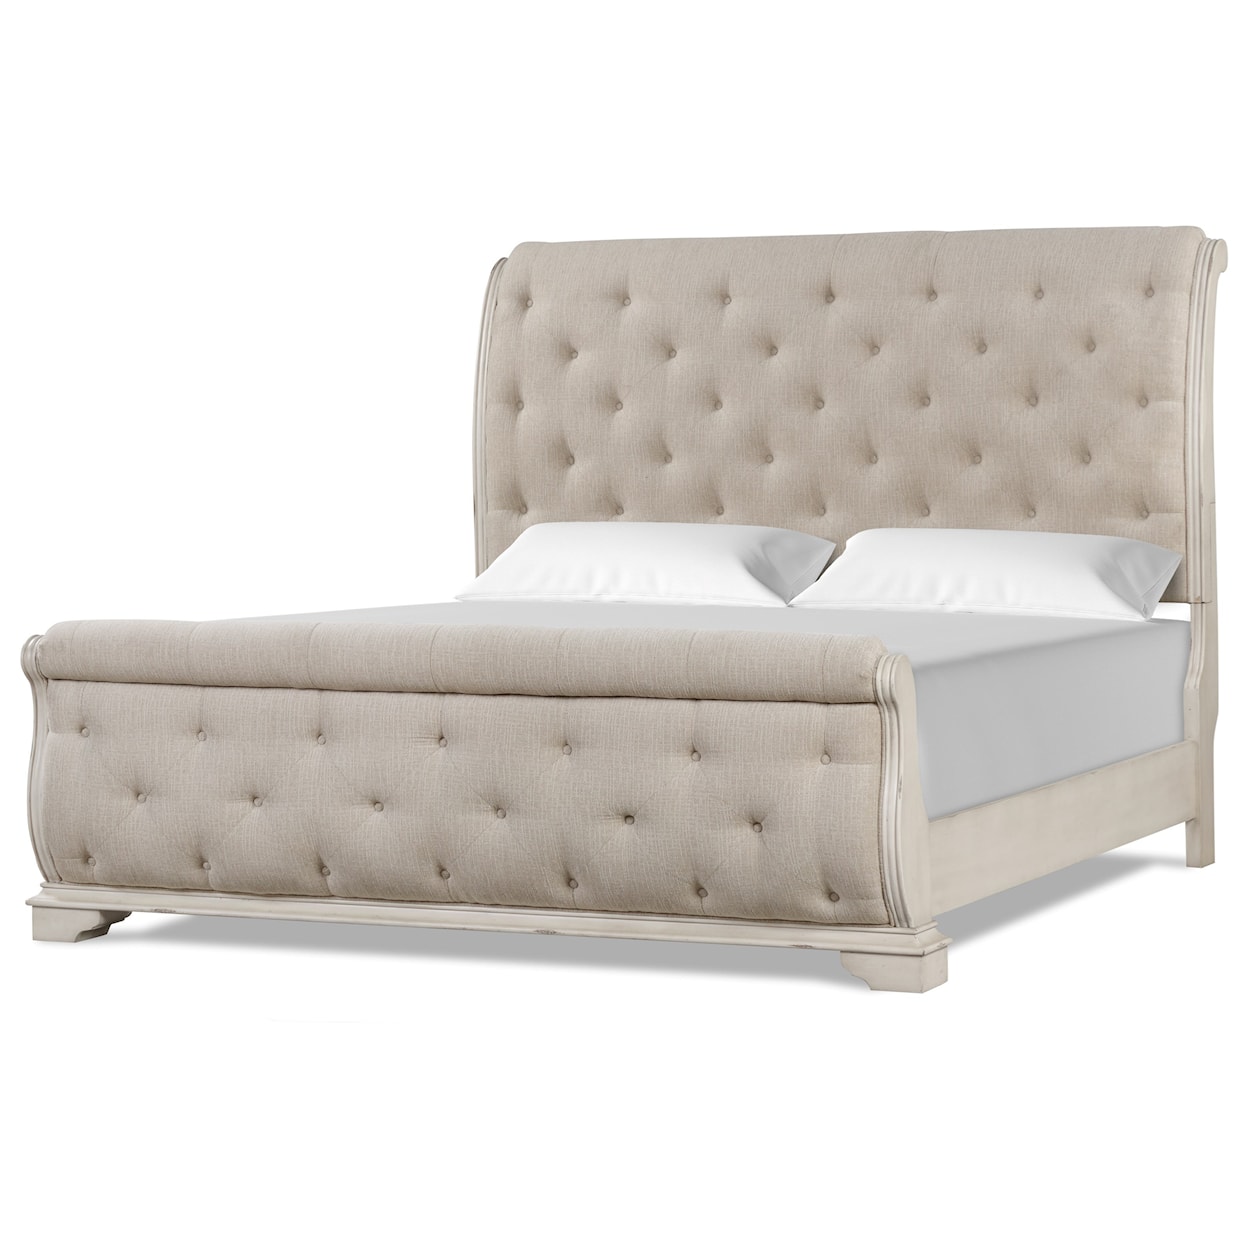 New Classic Anastasia California King Bed